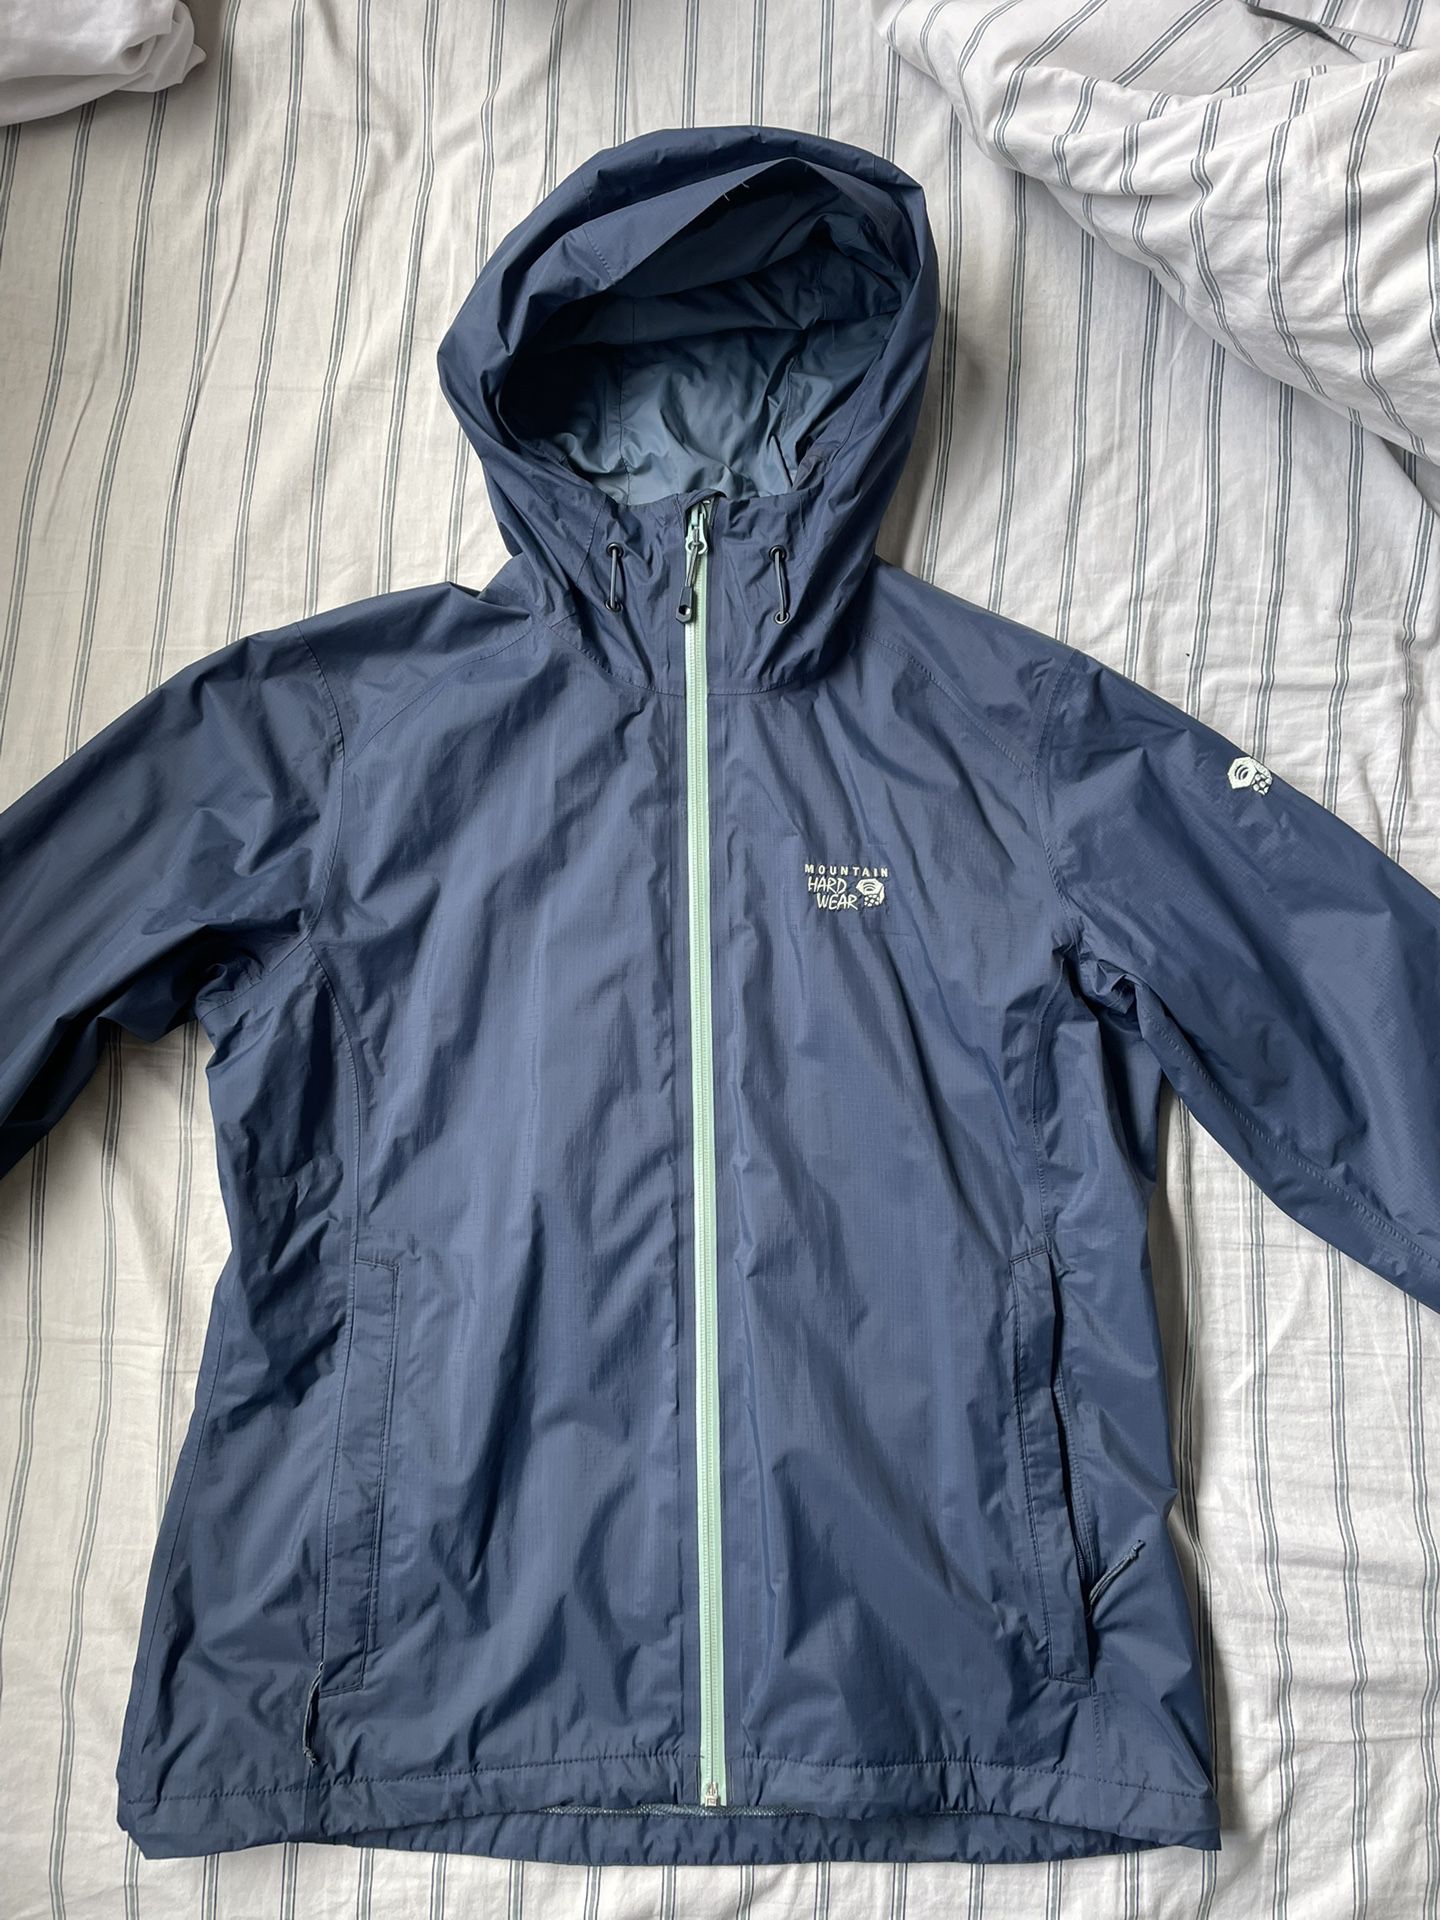 Women’s Mountain Hardwear Rain Jacket Large